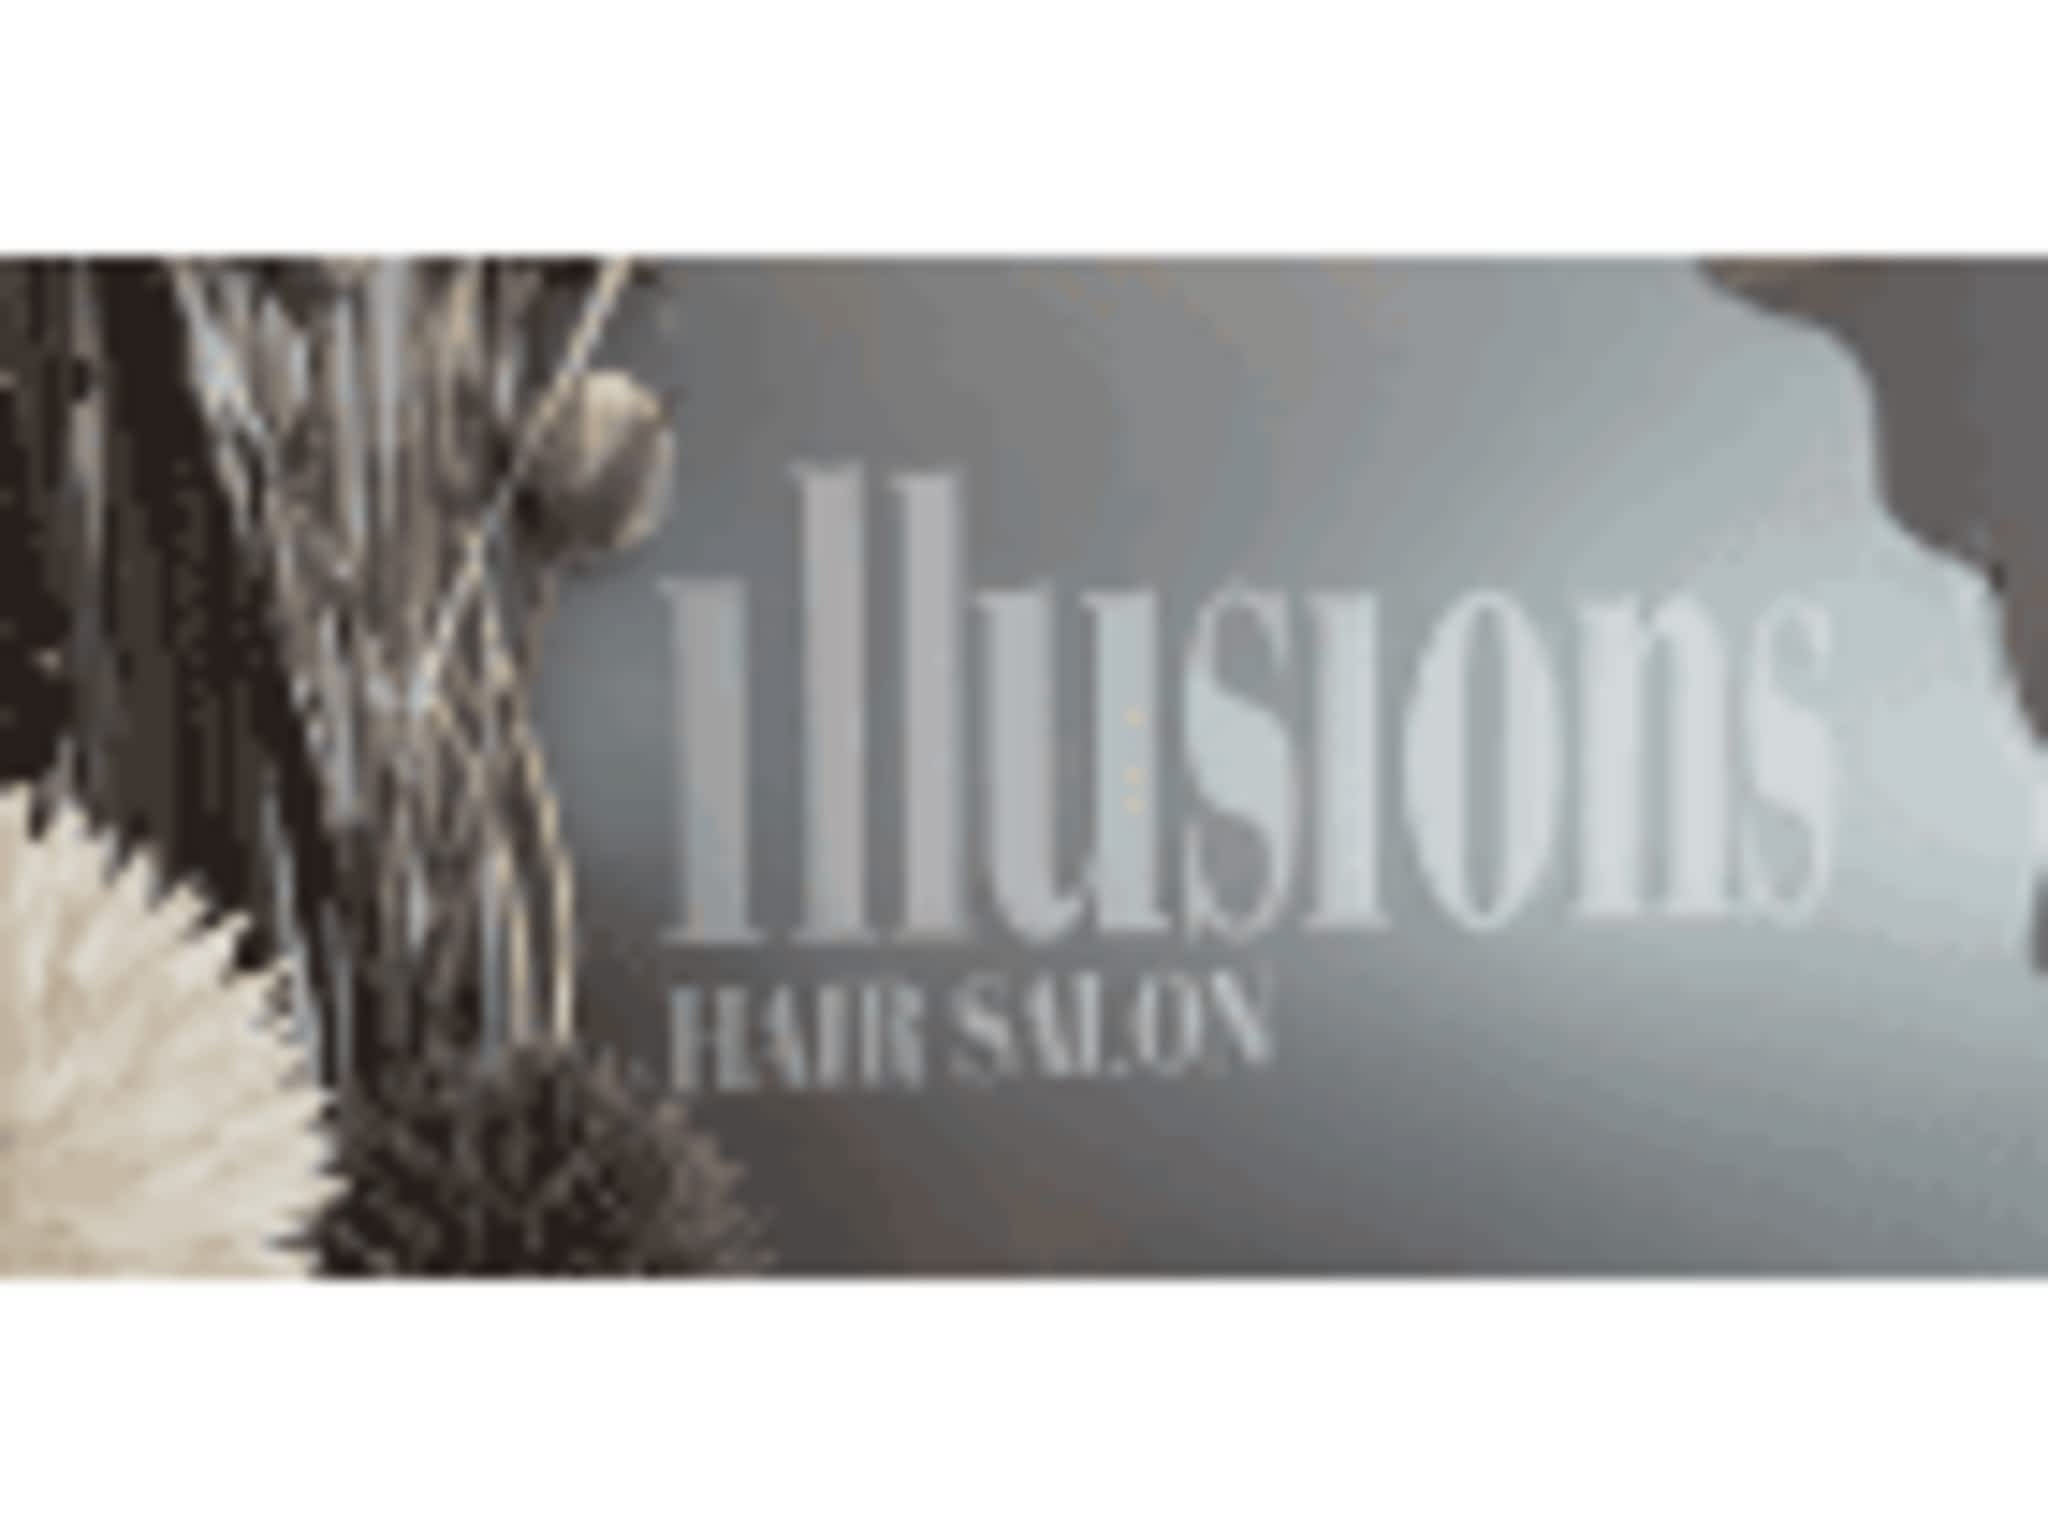 photo Illusions Hair Salon